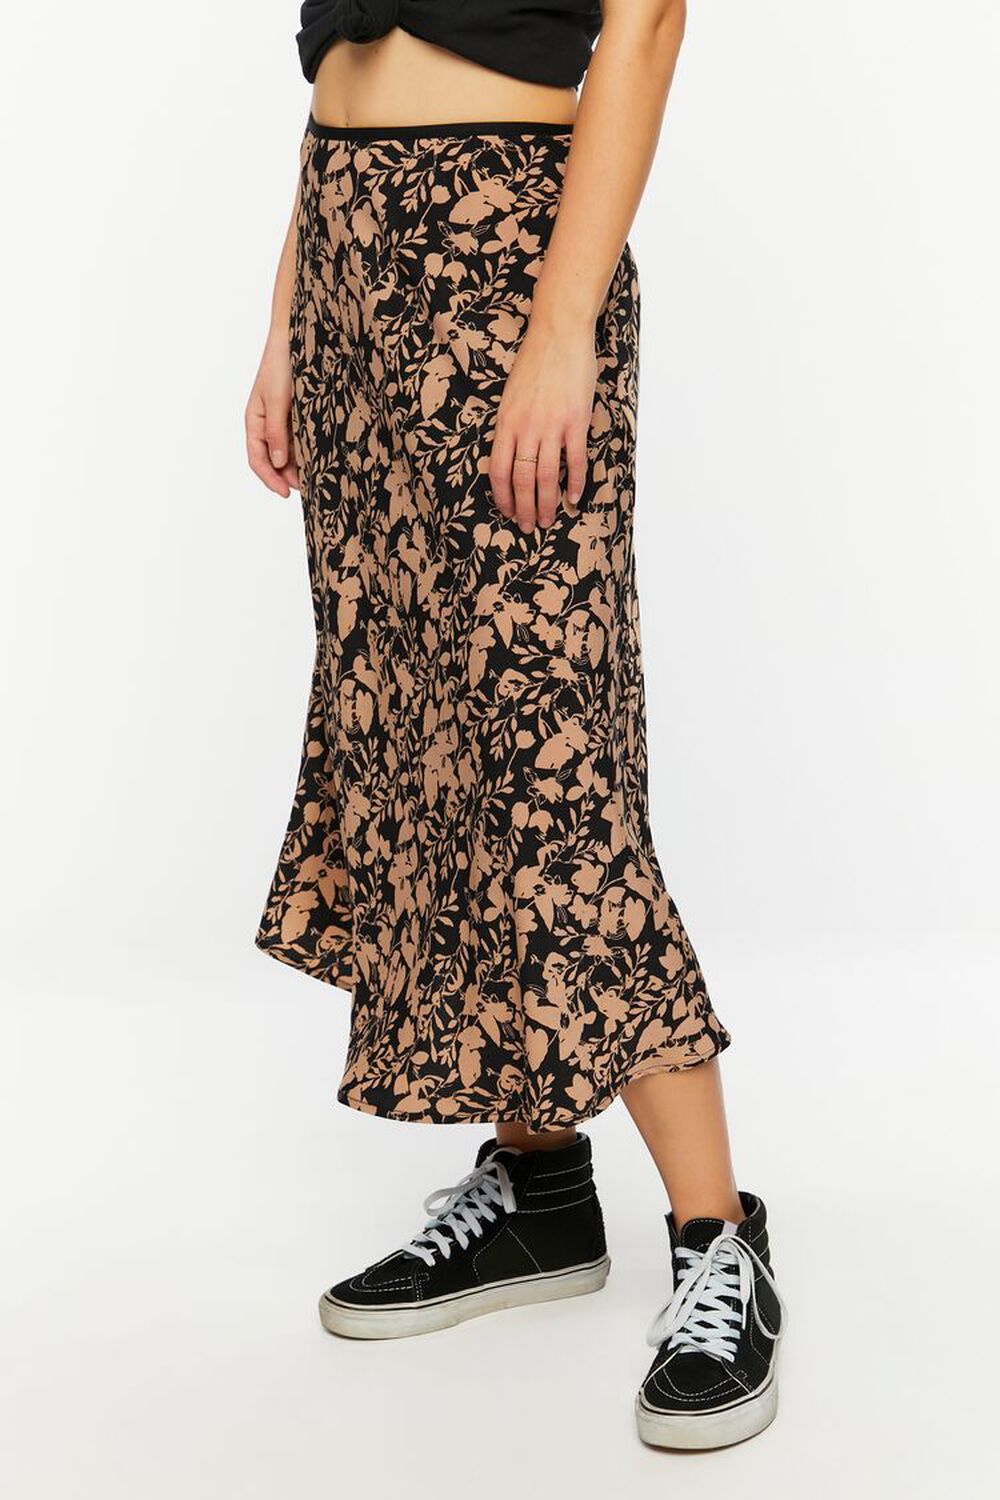 BLACK/BEIGE Floral Print A-Line Midi Skirt, image 3